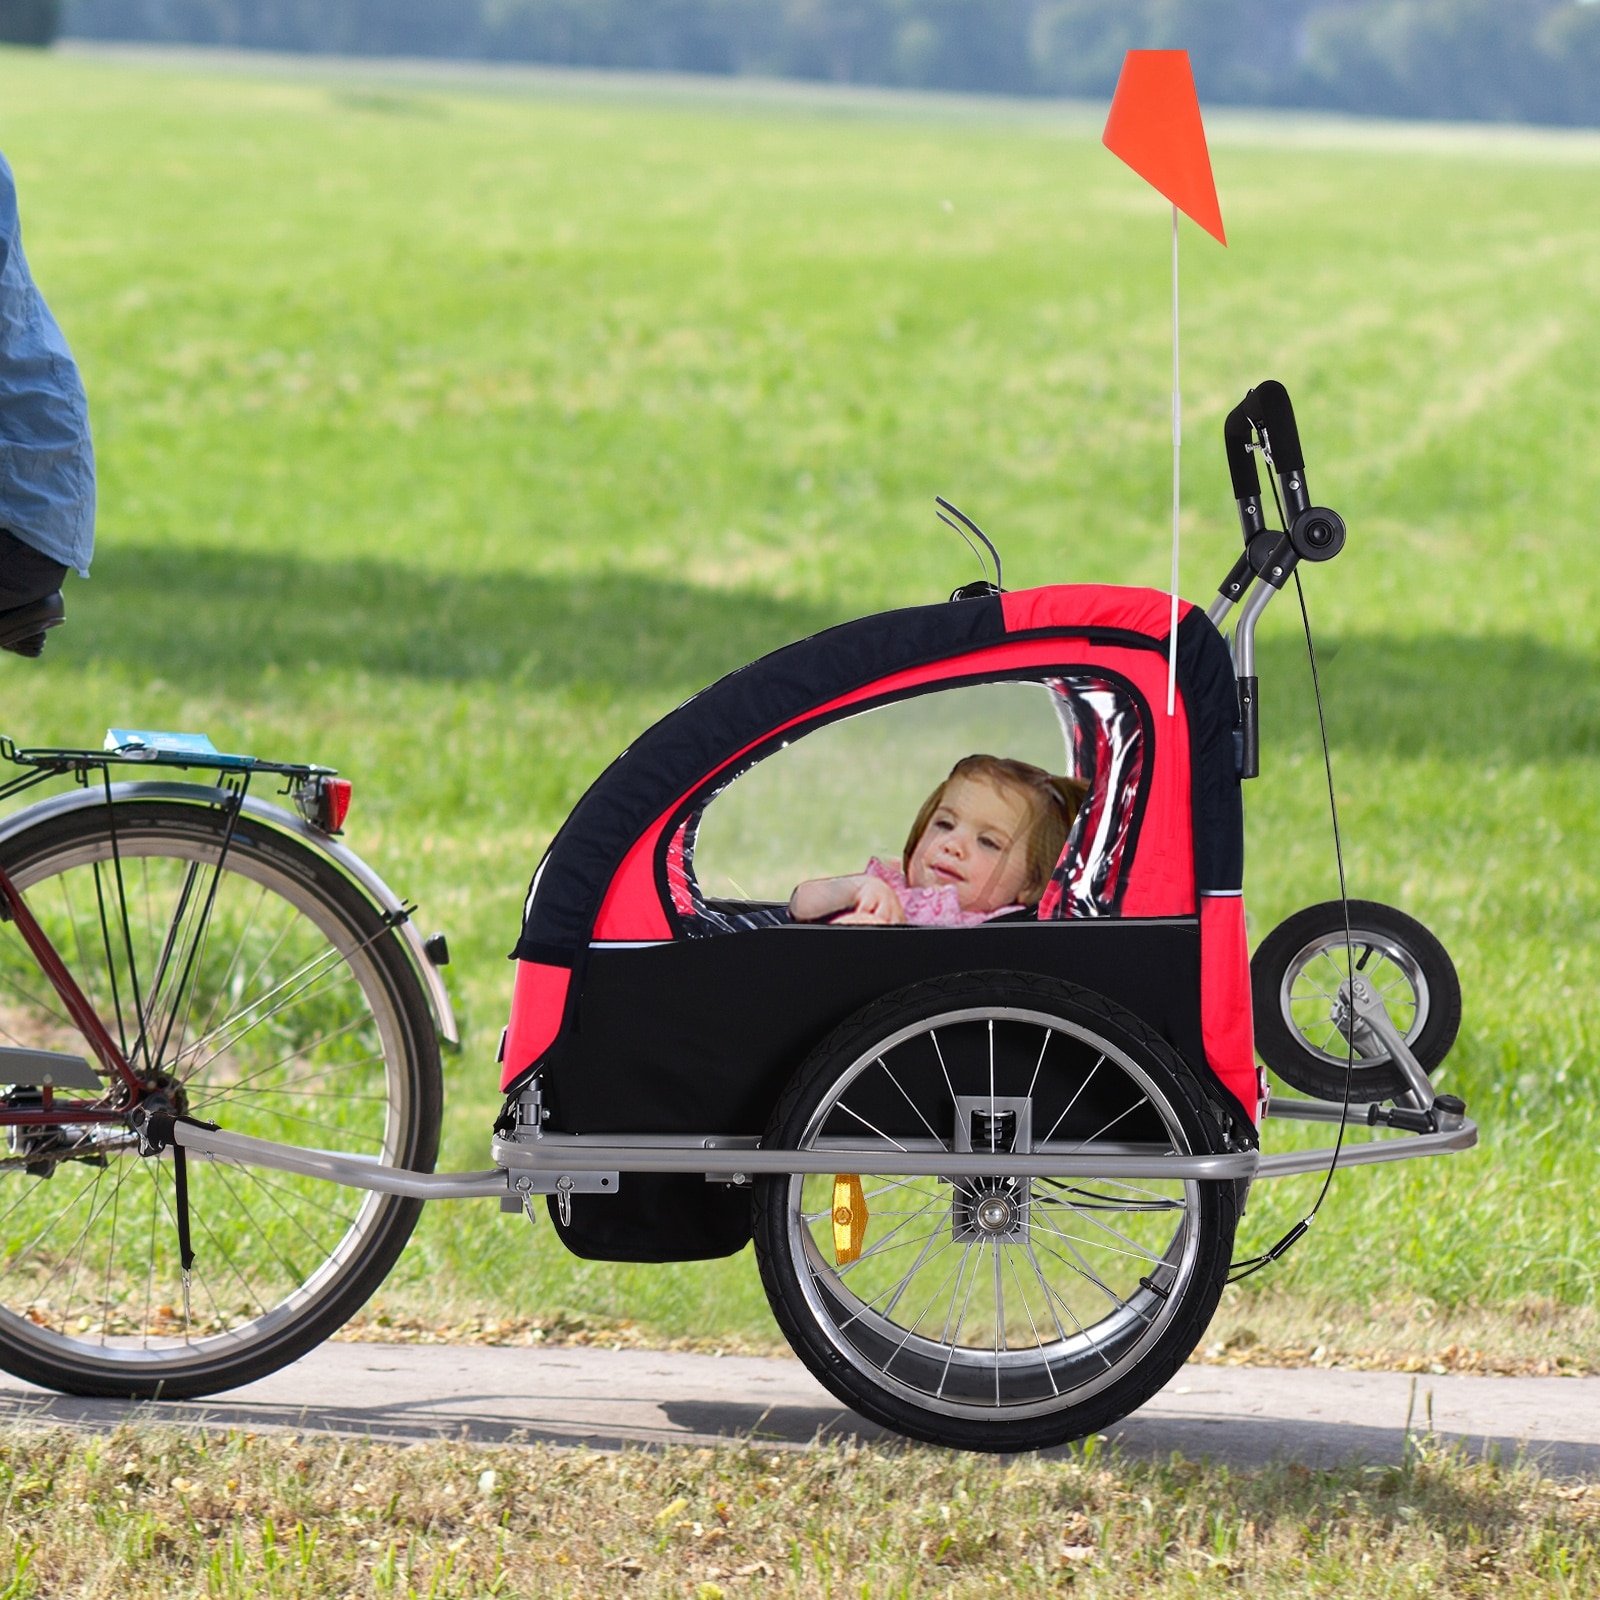 Aosom Elite II 3 in 1 Double Child Bike Trailer and Stroller